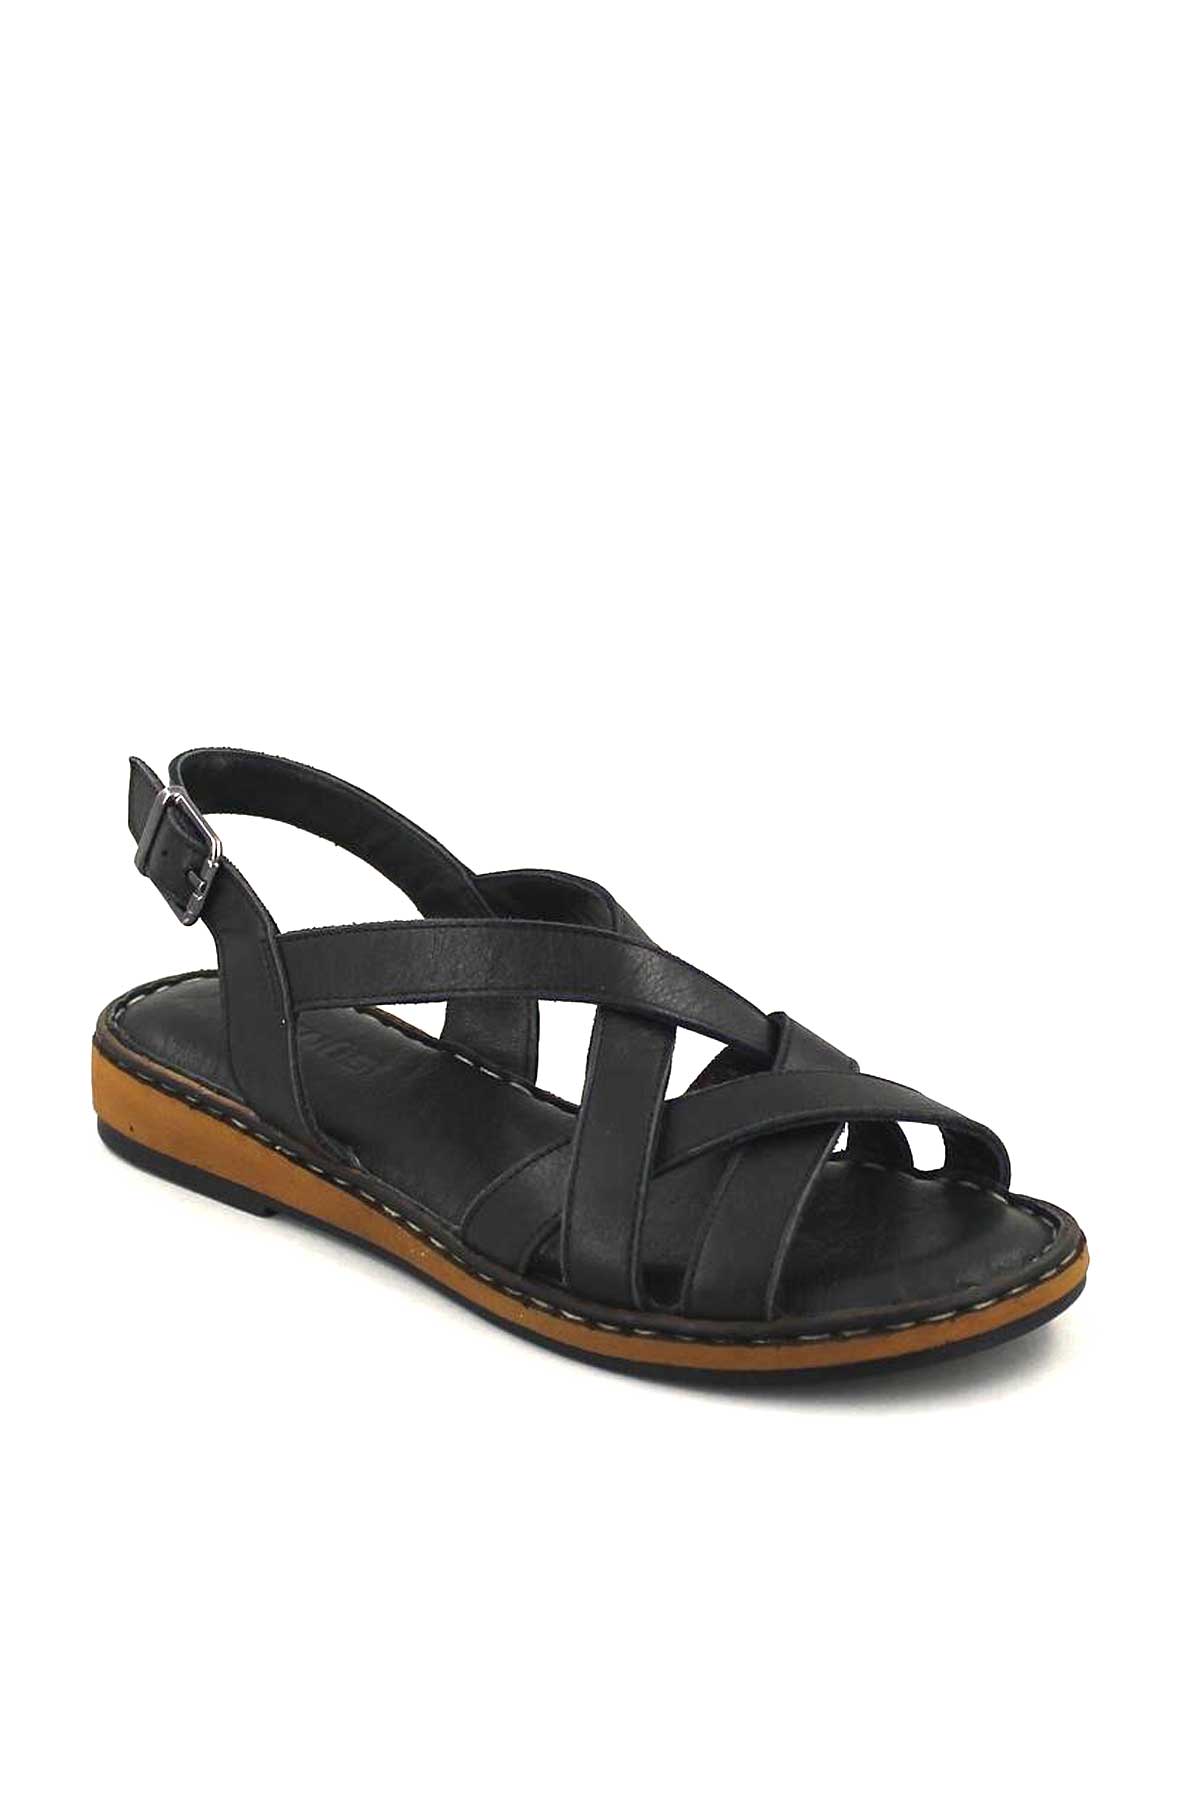 Kadın Deri Sandalet Siyah 20981202 - Thumbnail